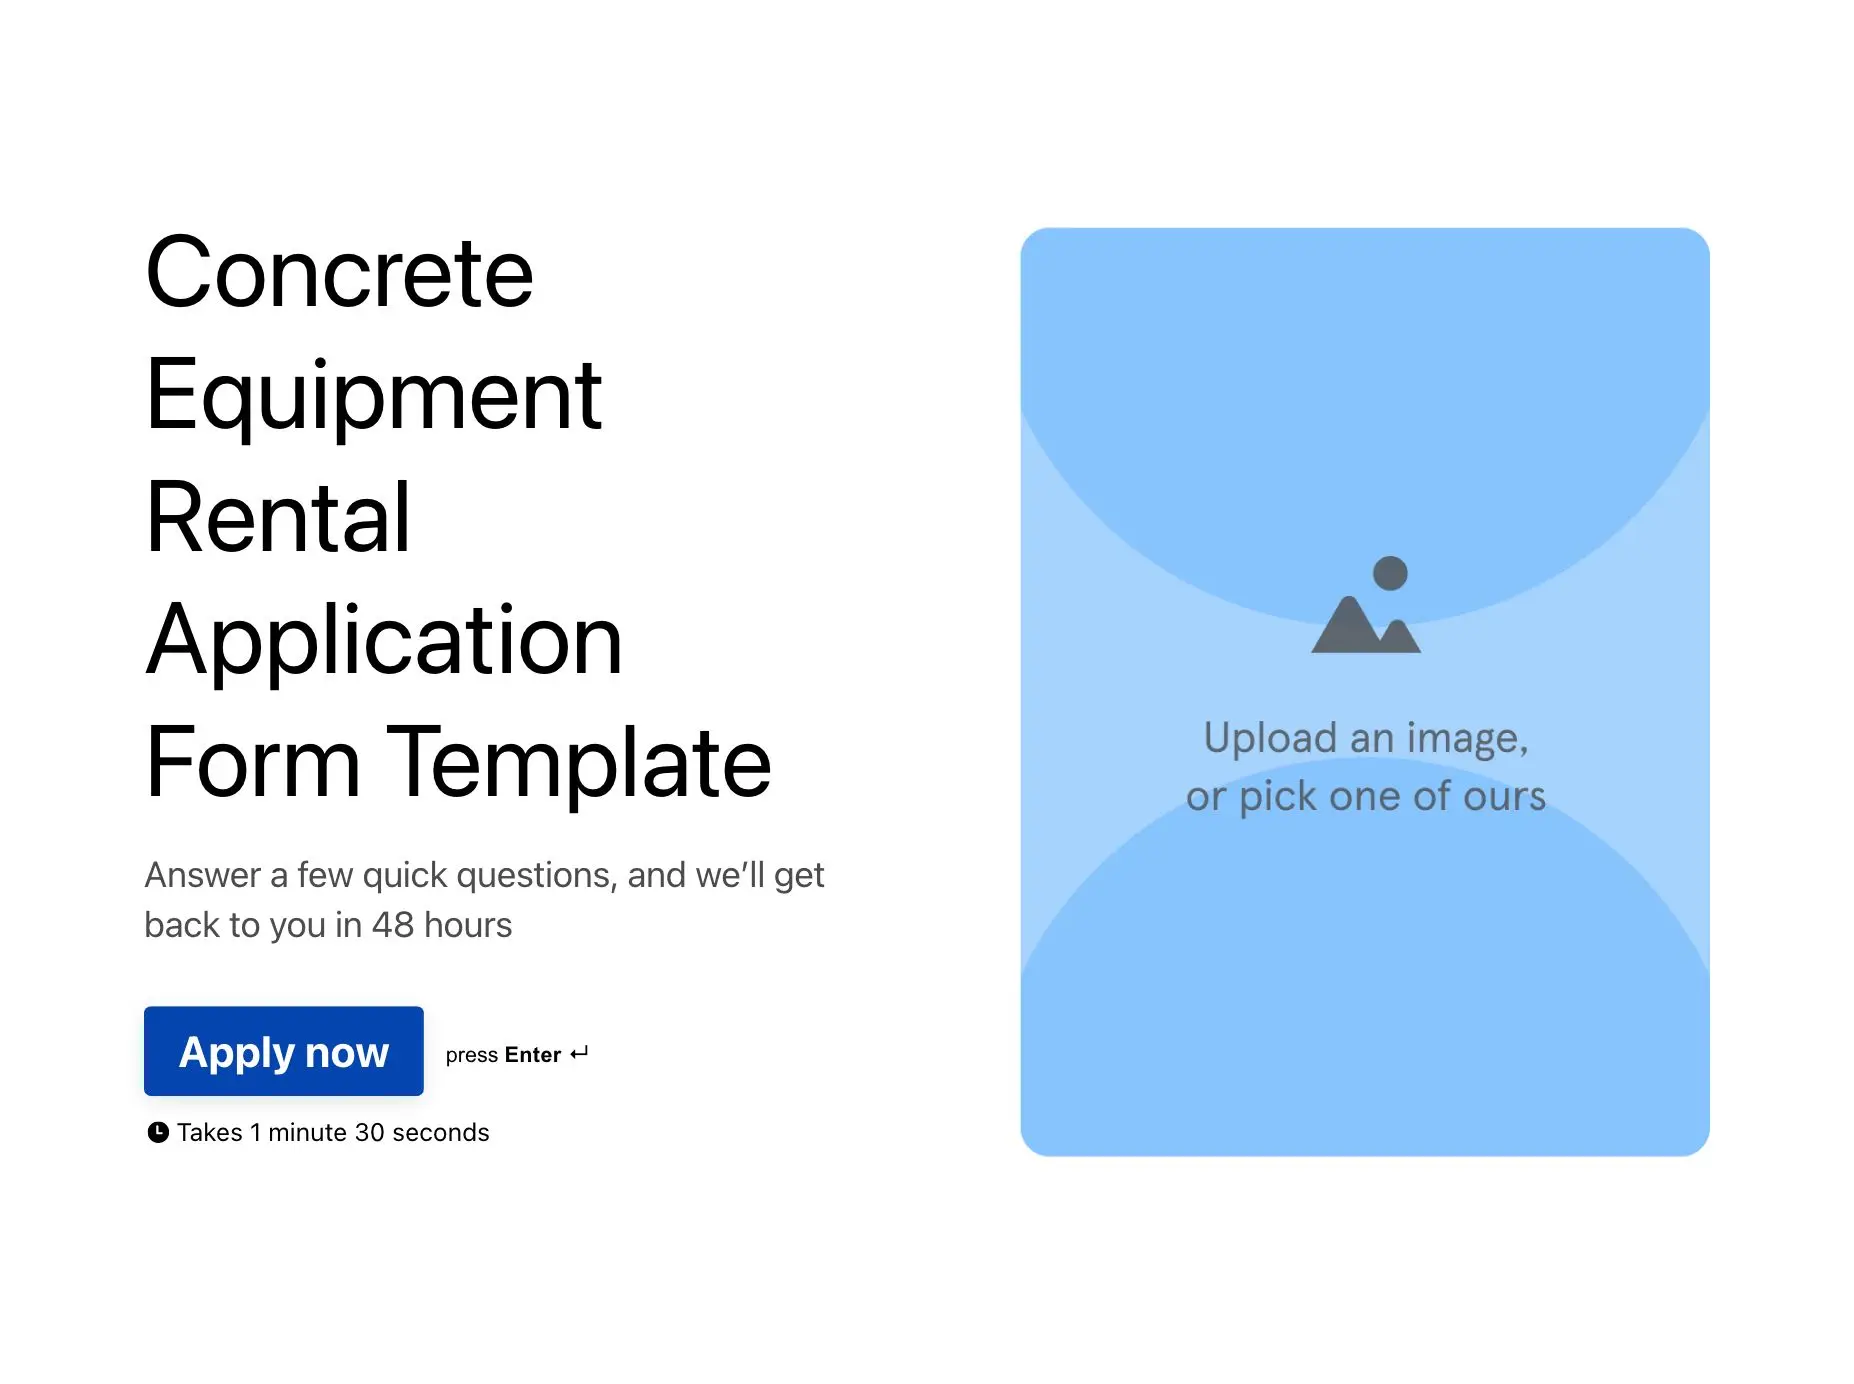 Concrete Equipment Rental Application Form Template Hero